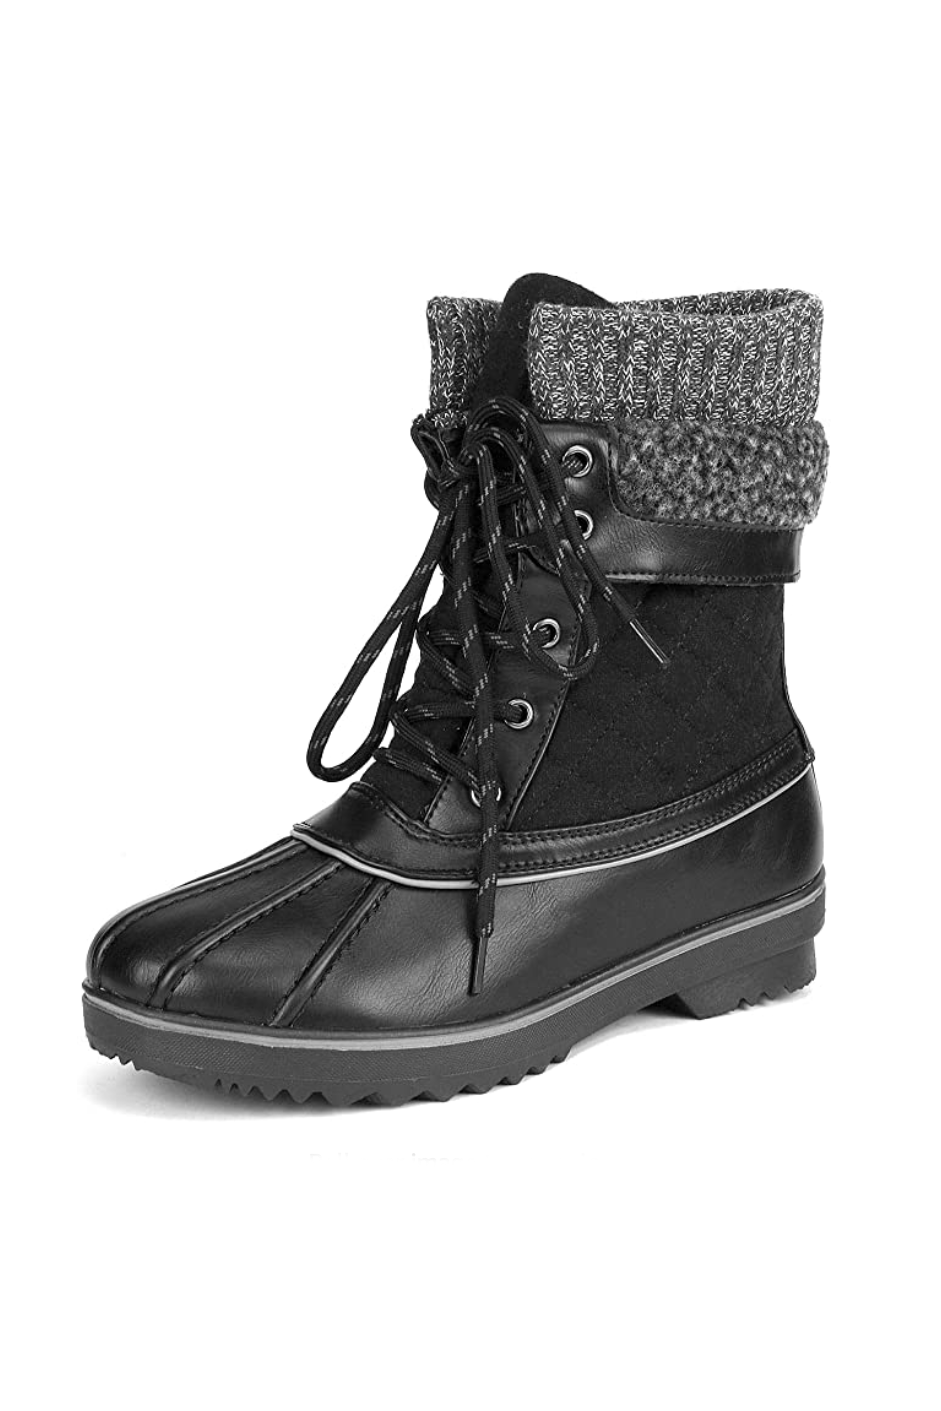 cute black snow boots